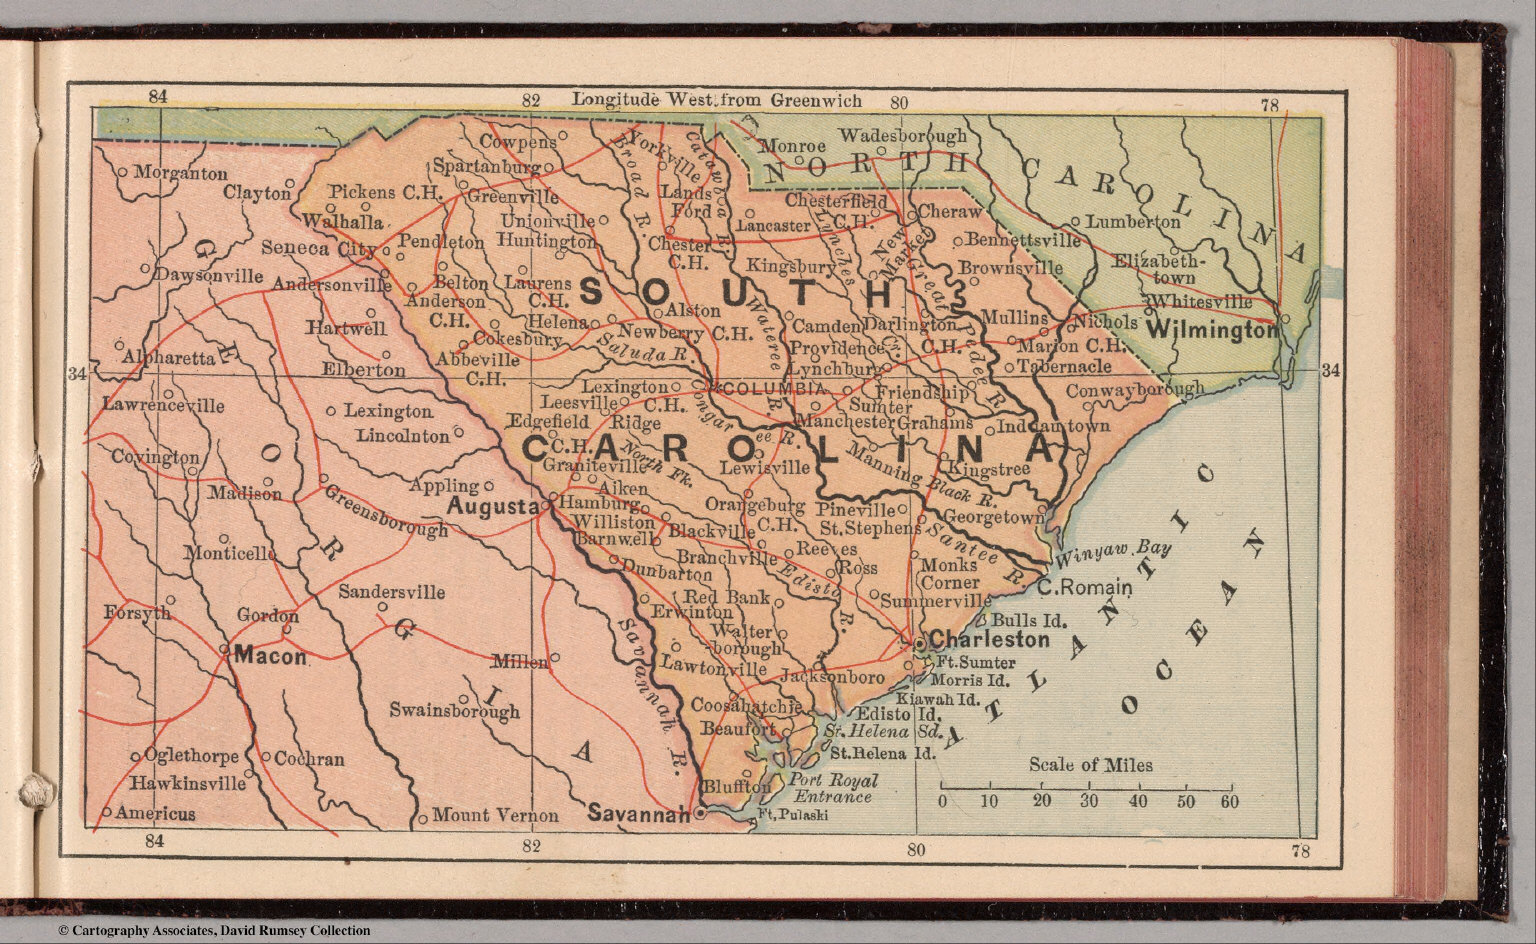 South Carolina David Rumsey Historical Map Collection 9221